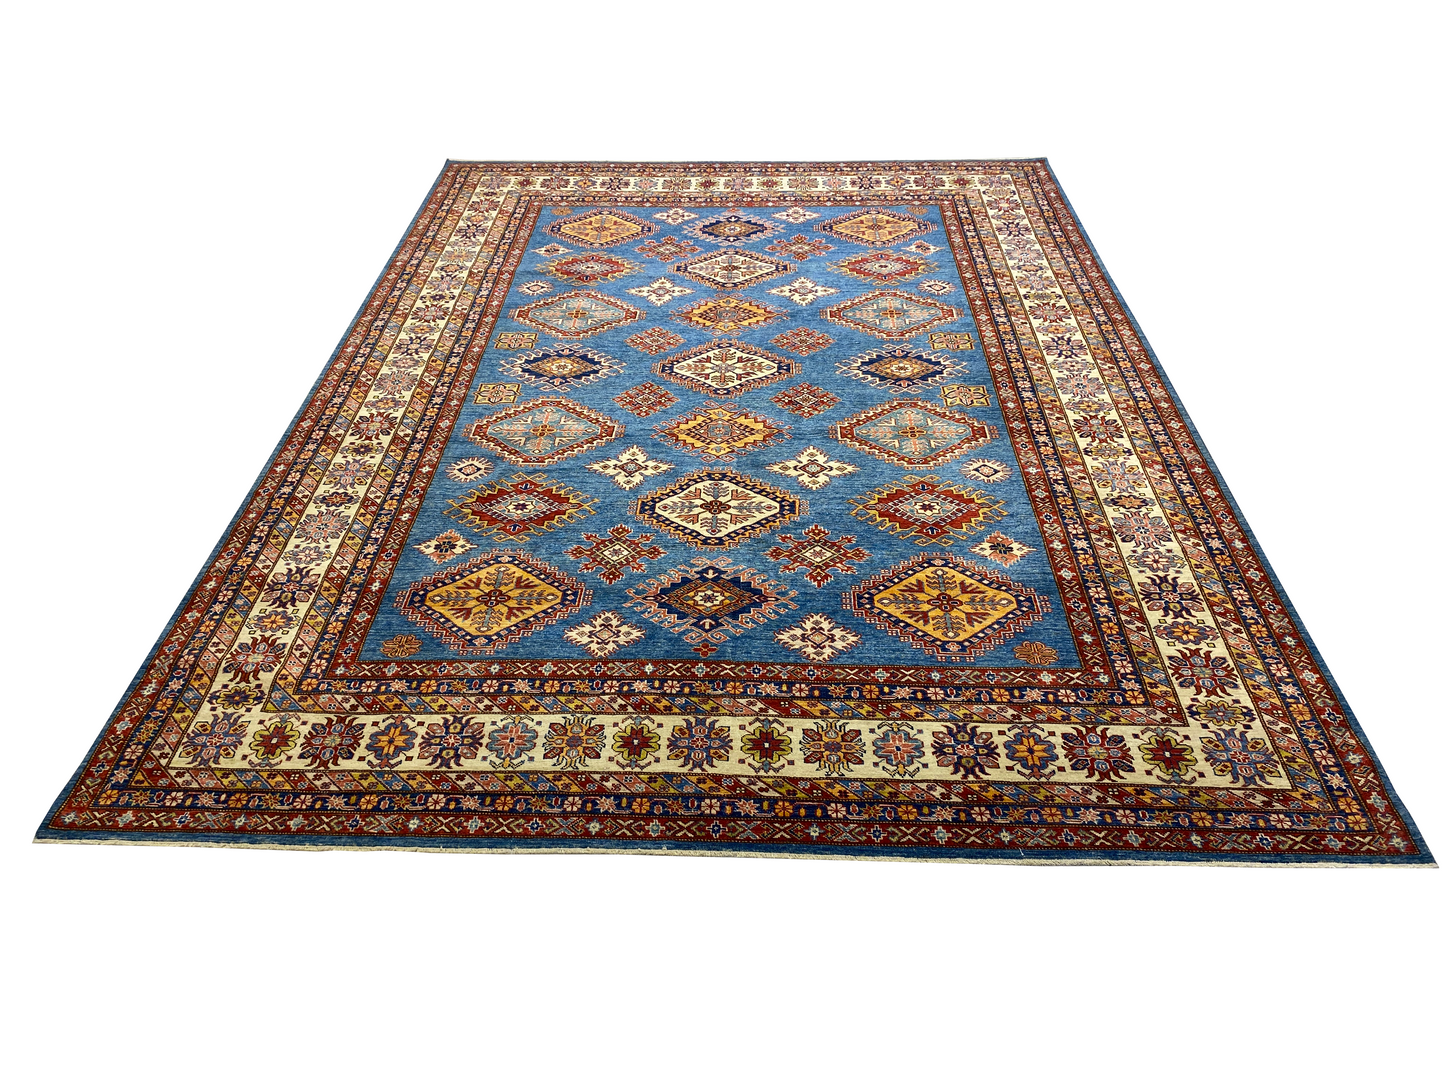 Şirvan Bicolor Carpet 372 X 271 cm